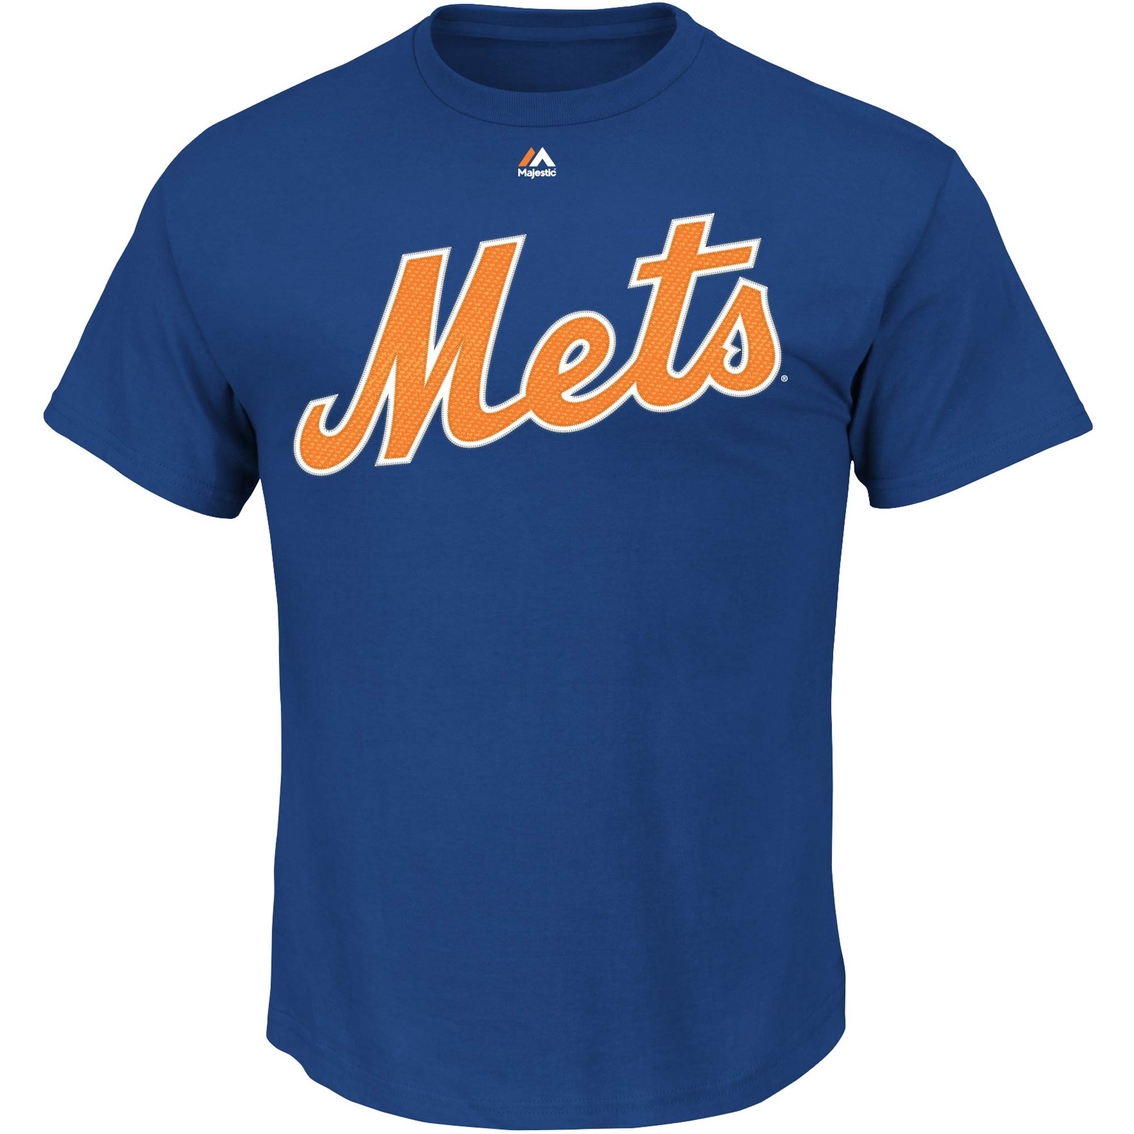 Majestic Mlb New York Mets Wordmark Tee | Shirts | Clothing ...